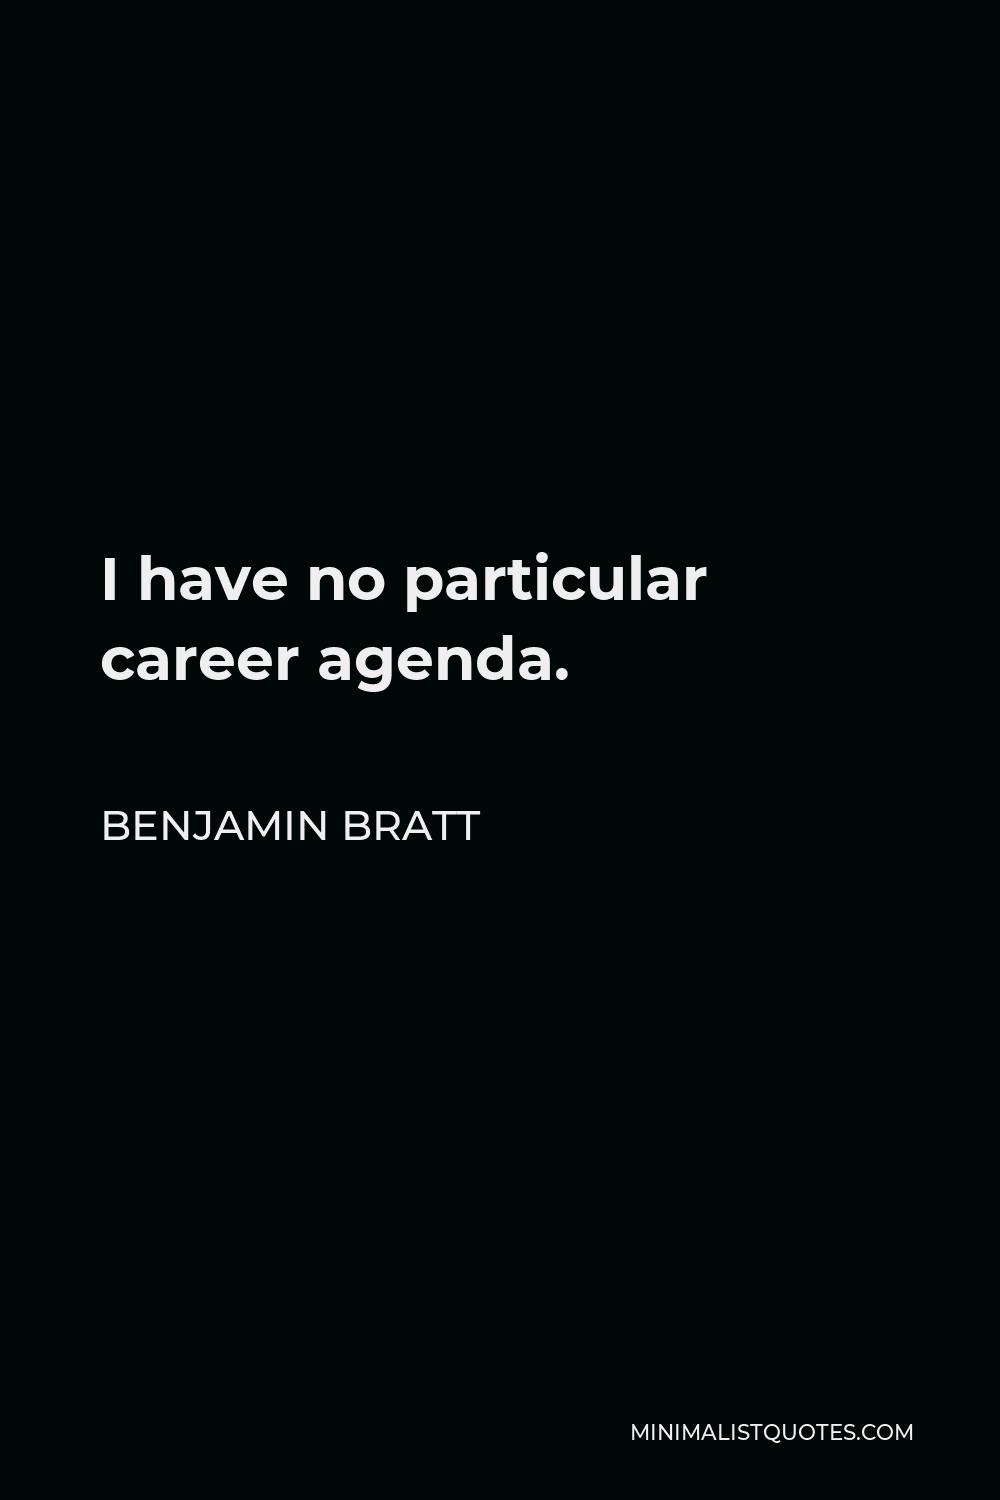 Benjamin Bratt Quote - I have no particular career agenda.